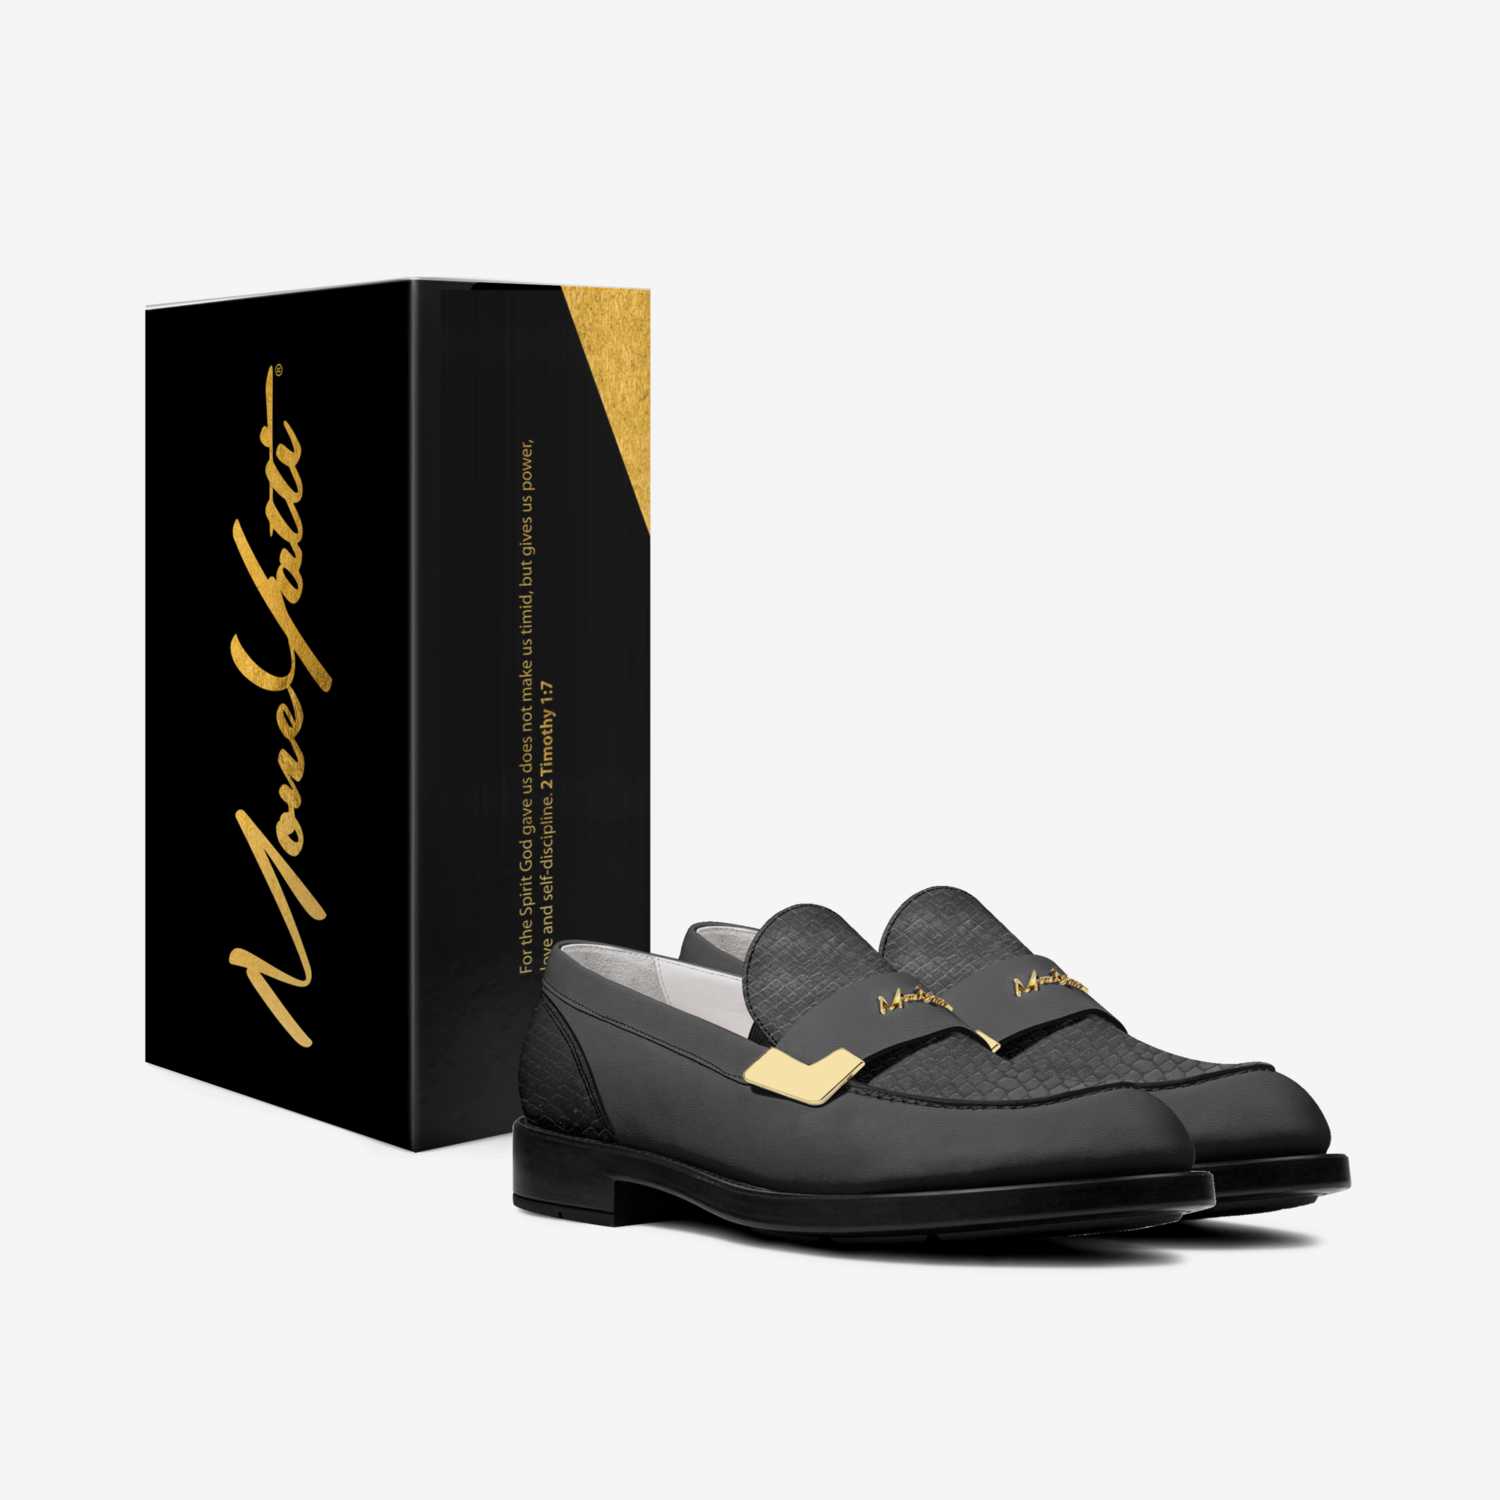 ElegantDrip 013 custom made in Italy shoes by Moneyatti Brand | Box view